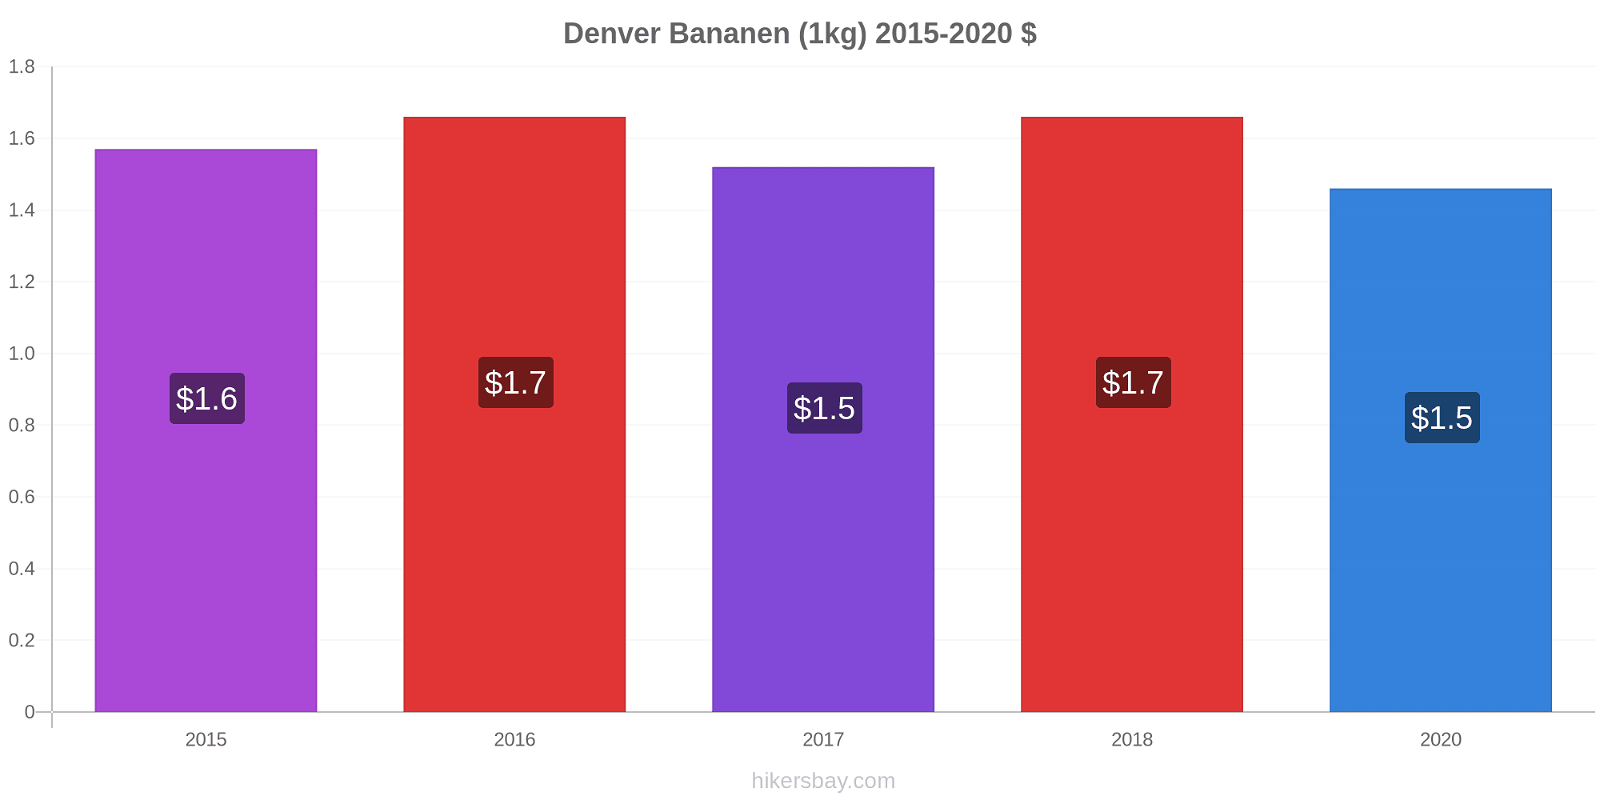 Denver Preisänderungen Banane (1kg) hikersbay.com